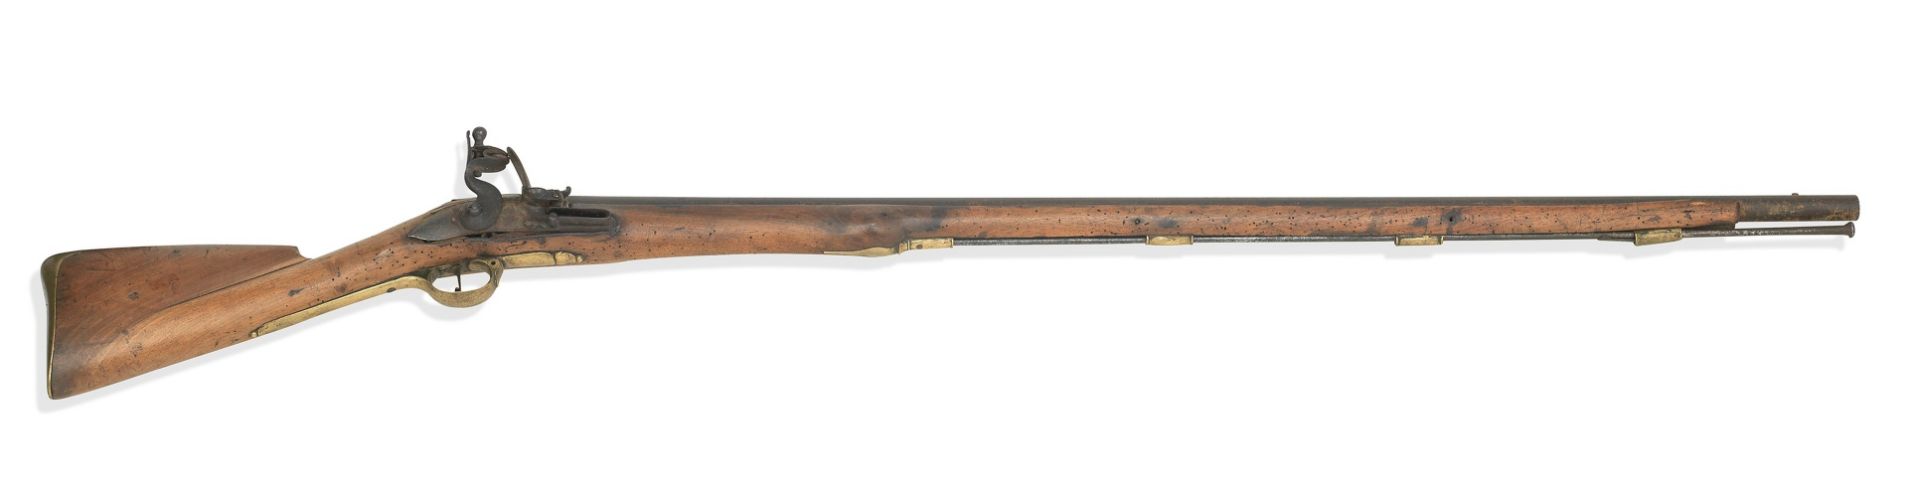 A Rare Flintlock Long Land Pattern Service Musket